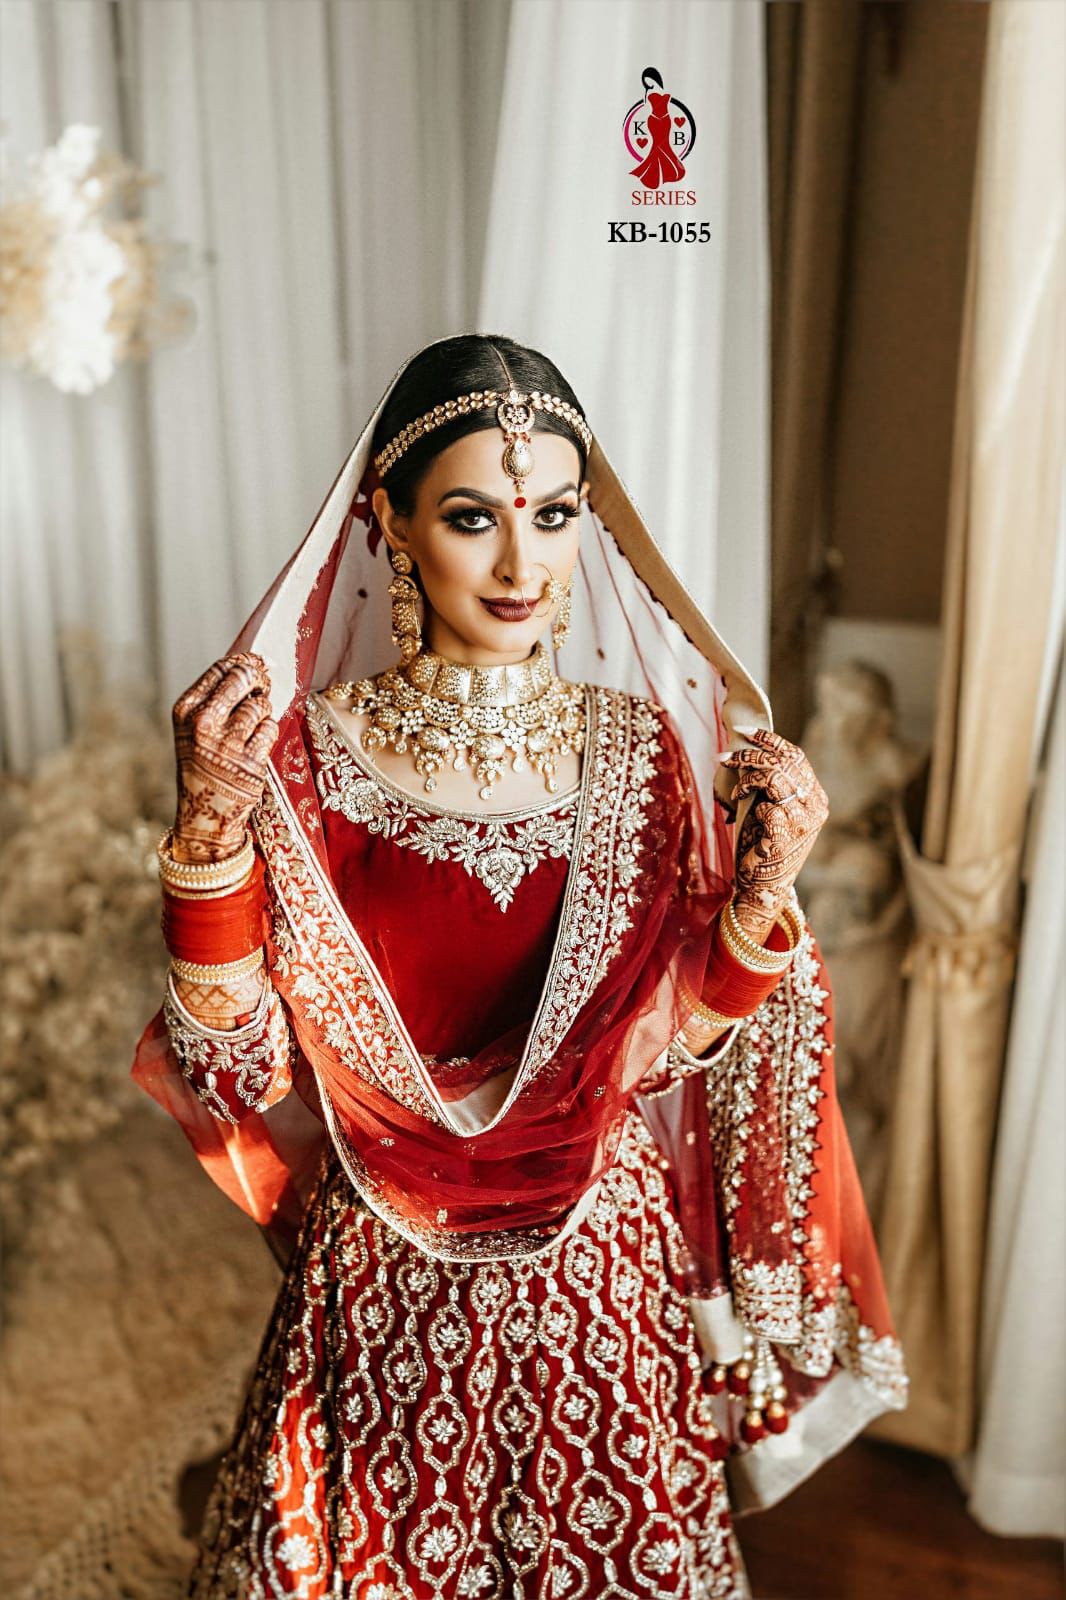 Senhora Presents Design No. Kb-1055 Indain Women Bridal Wear Wedding Lehenga Choli Collection At Wholesale Price